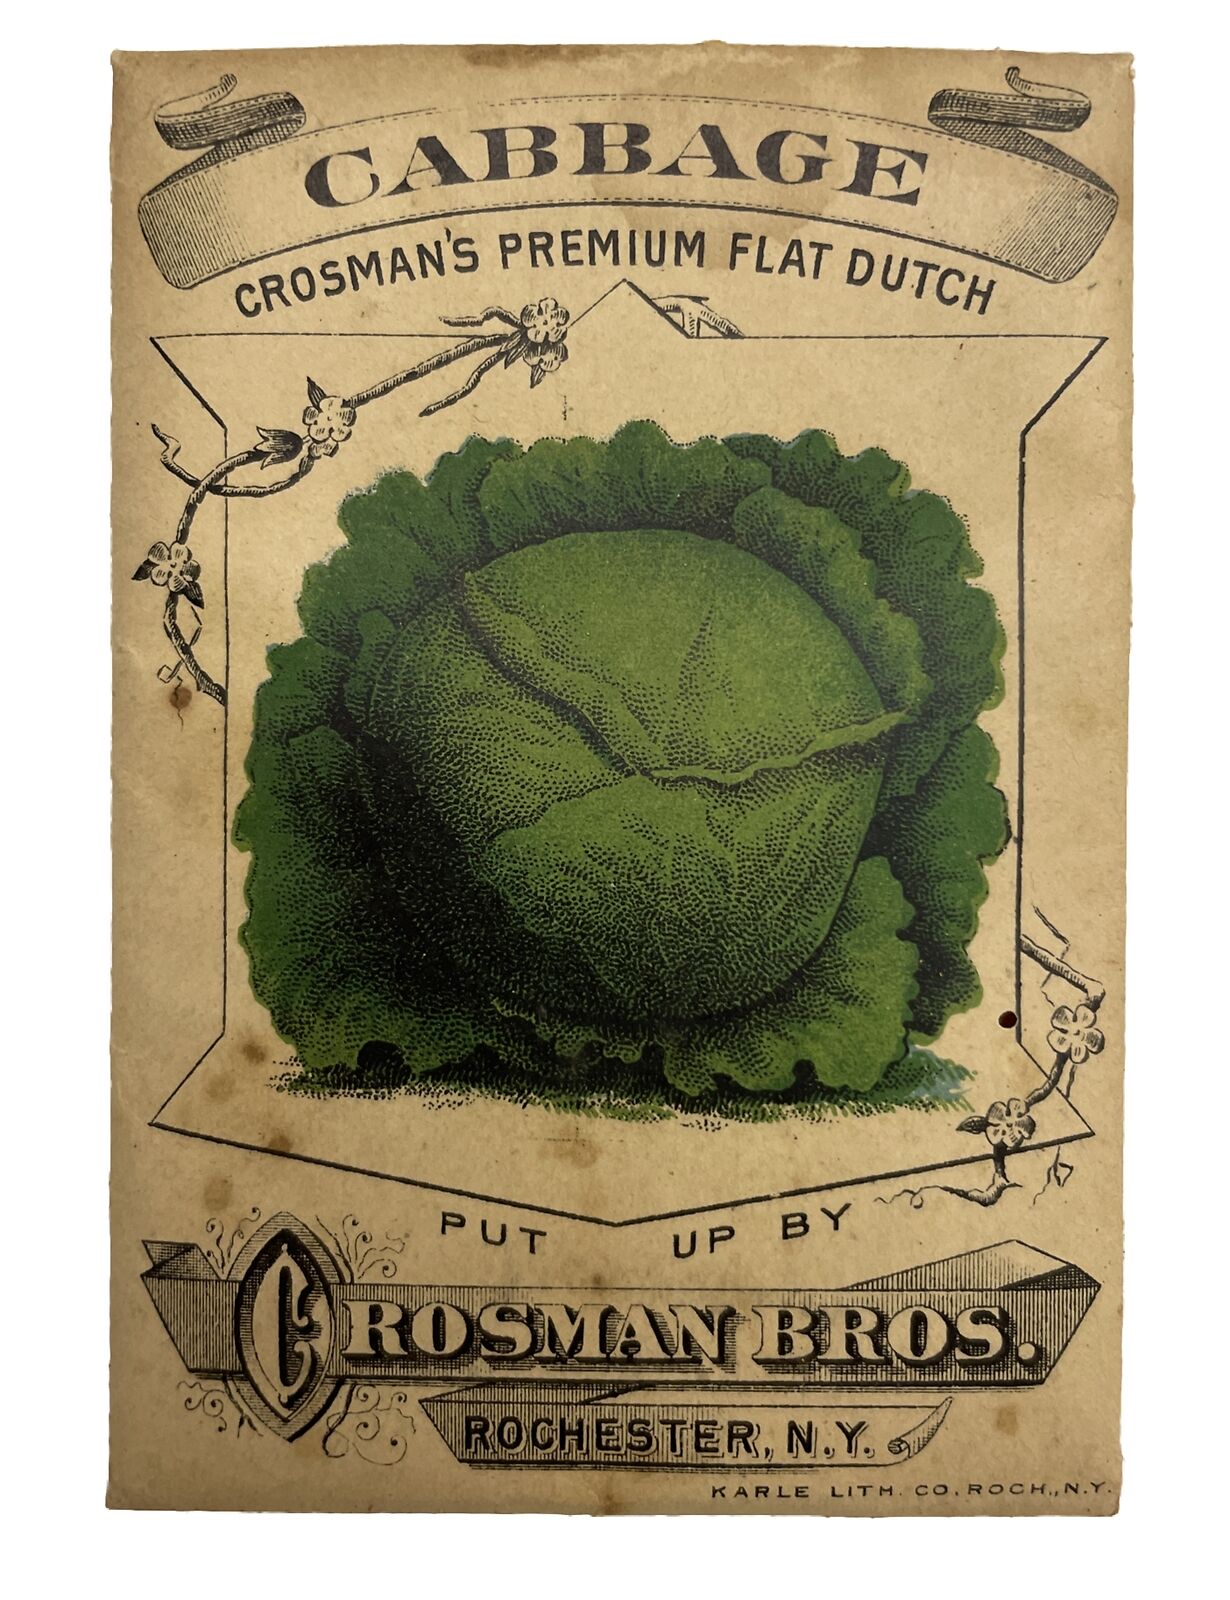 RARE NOS Antique Crosman Bros. Premium Flat Dutch Cabbage Seed Packet w/ Seeds